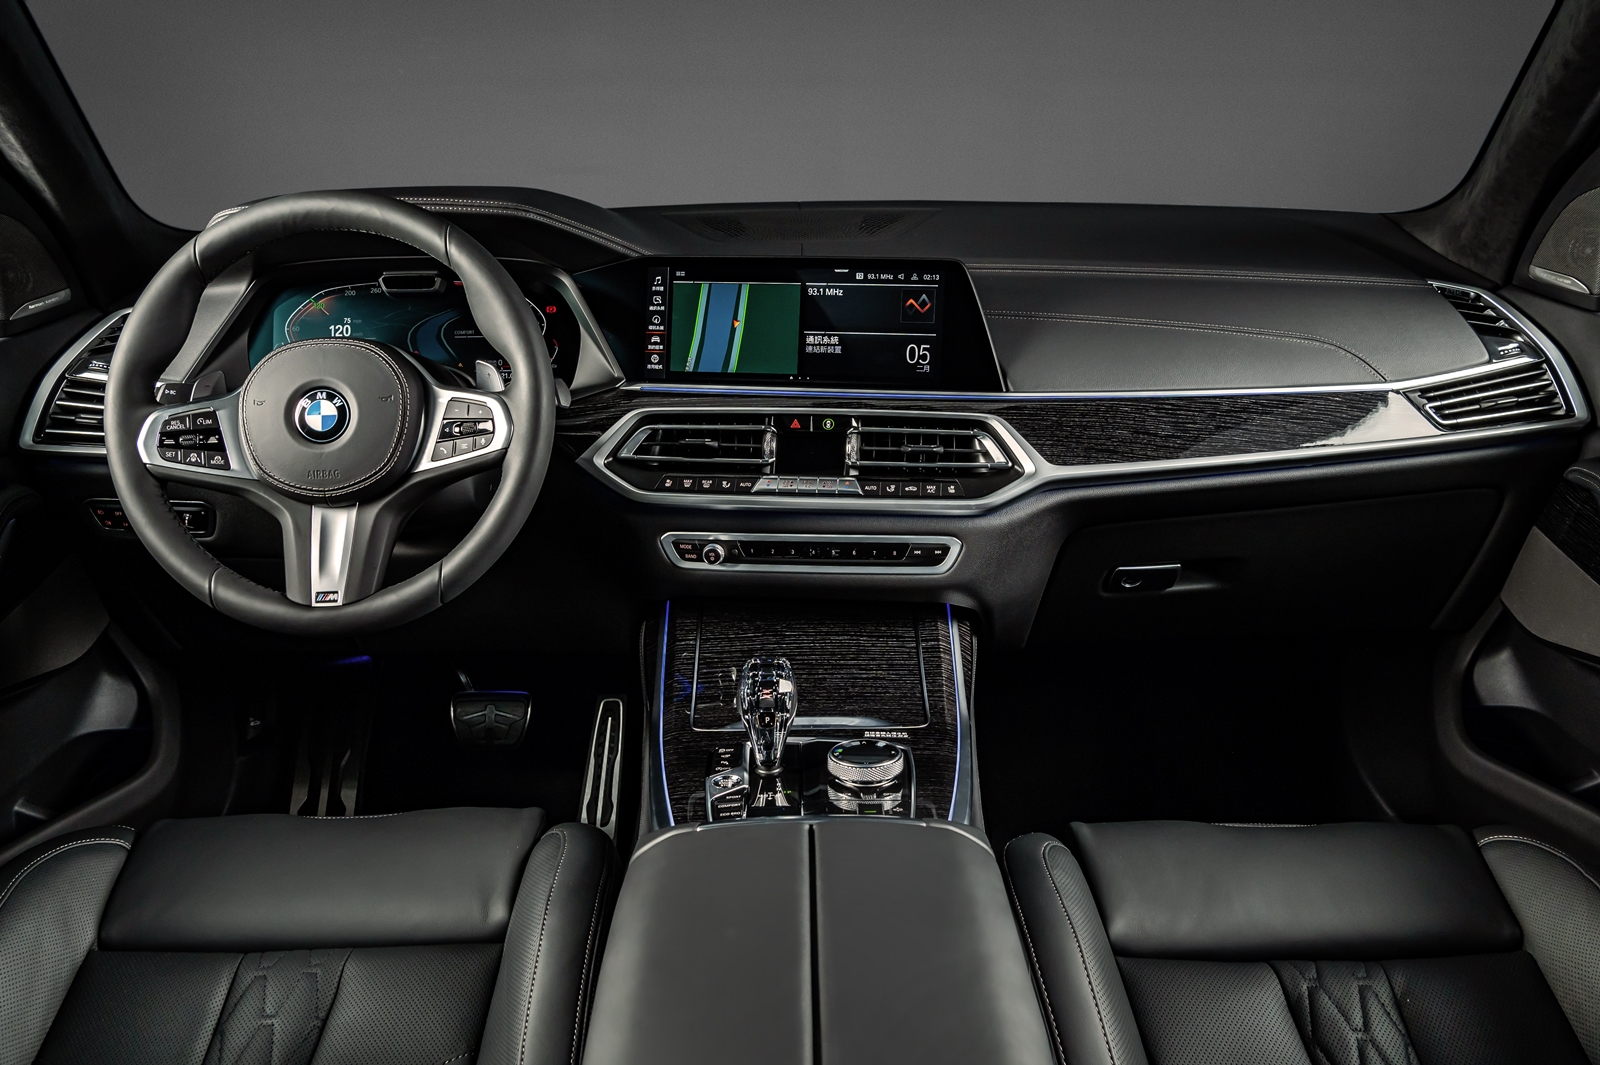 BMW X7 Dark Knight曜黑版配備全數位虛擬座艙、iDrive 7.0 操作介面、全新智慧語音助理2.0、iPhone手機數位鑰匙、無線智慧型手機整合系統、M 款多功能真皮方向盤與 Fineline 黑色高光澤木。